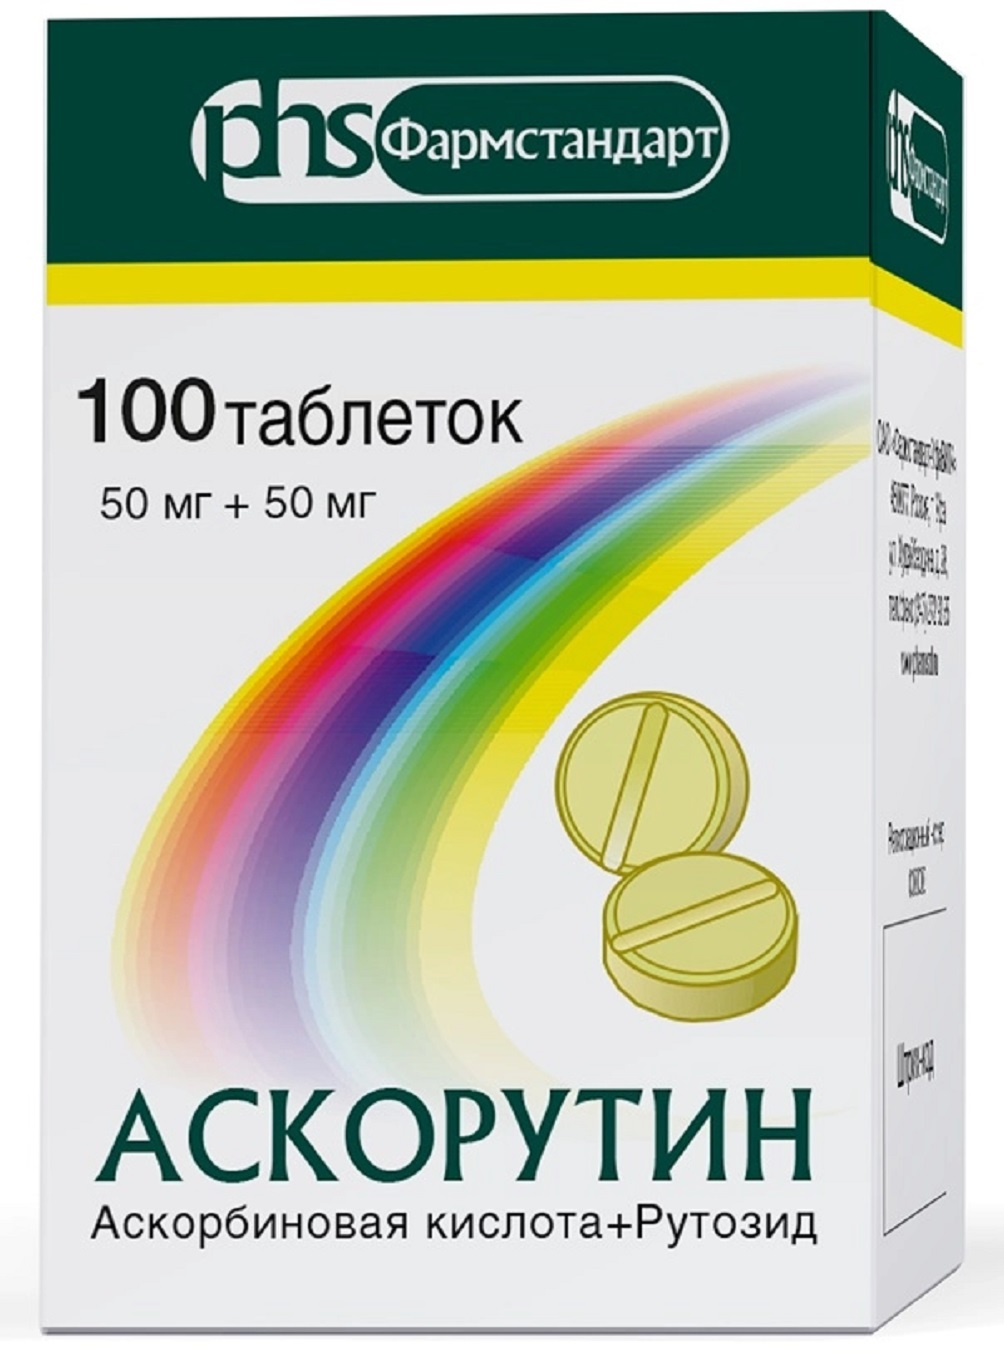 Аскорутин, таблетки 50 мг + 50 мг, 100 шт. аскорутин таблетки 50 мг 50 мг 50 шт